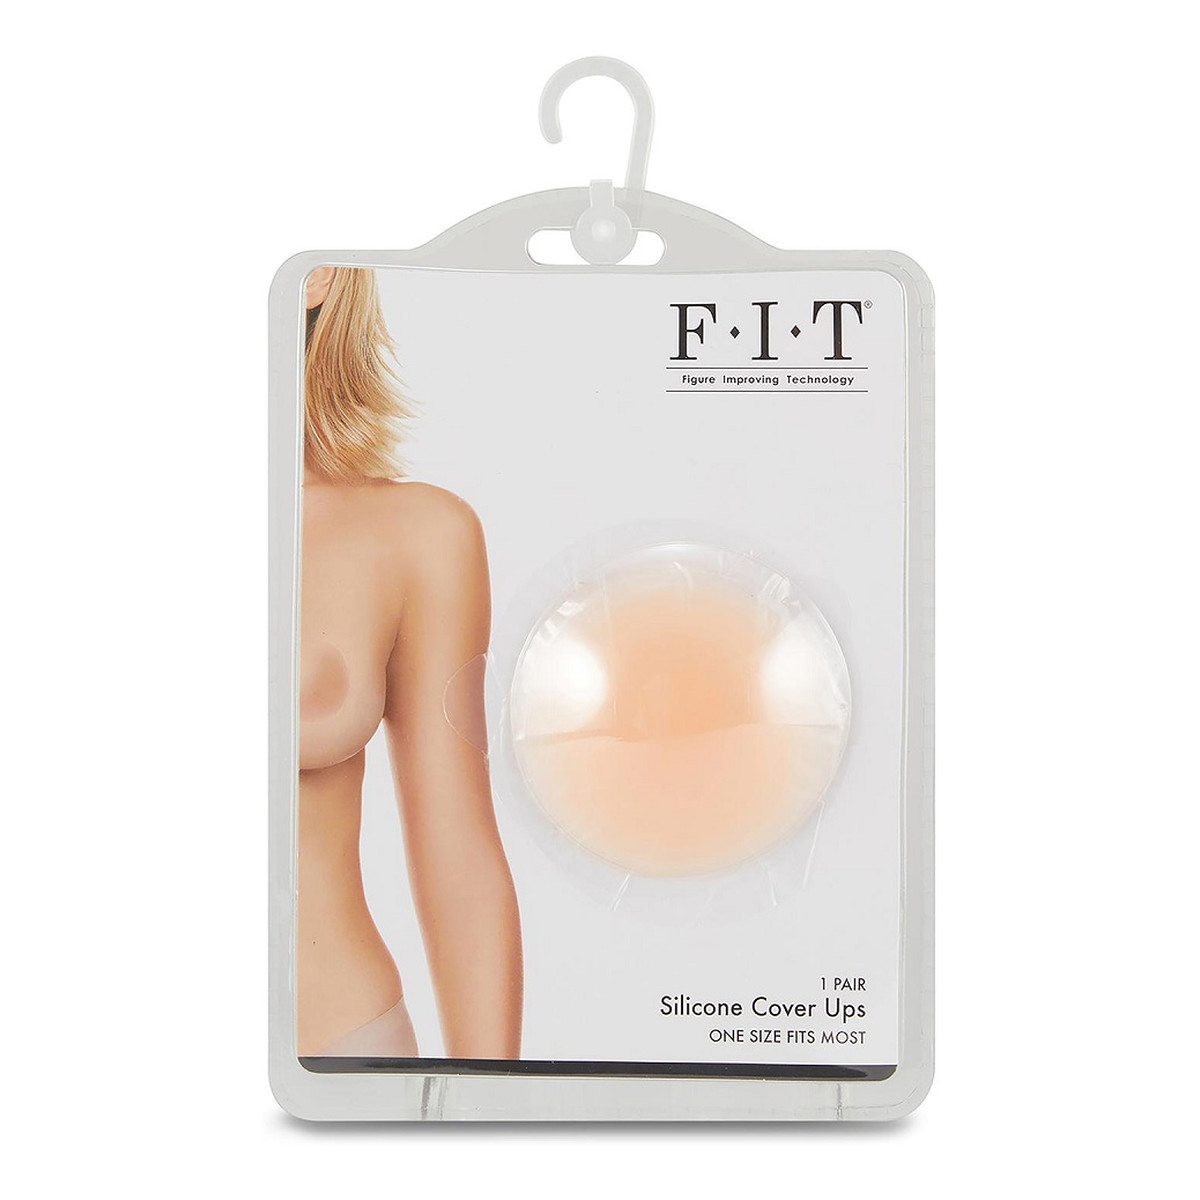 Fit Silicone nipple cover ups samoprzylepne silikonowe nakładki na piersi